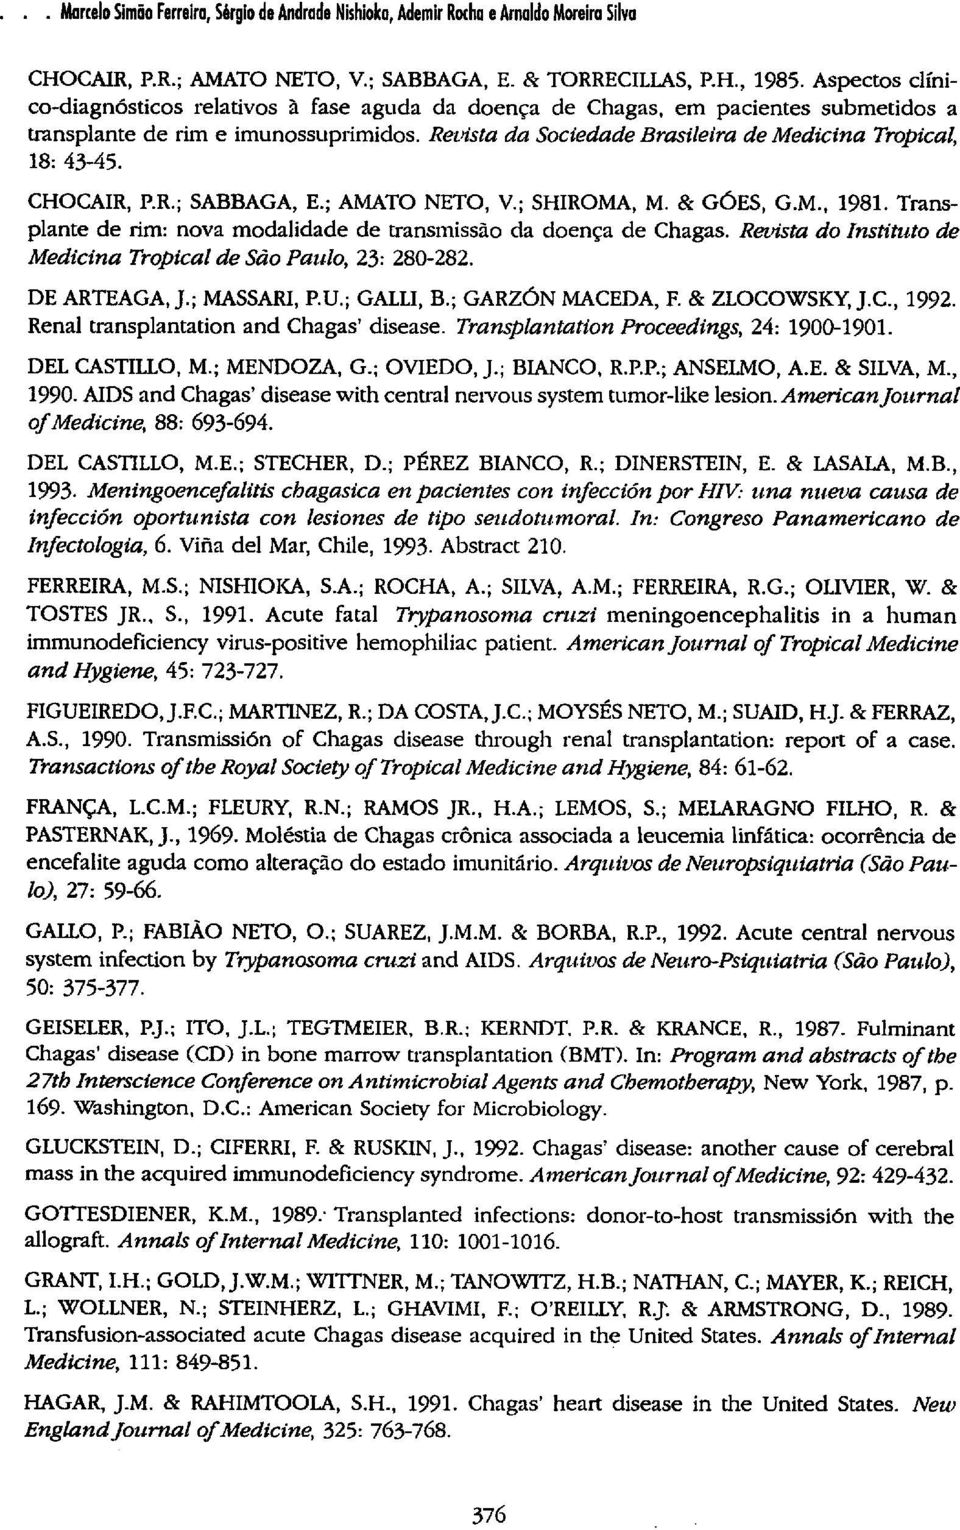 Revista da Sociedade Brasileira de Medicina Tropical, 18: 43-45. CHOCAIR, P.R.; SABBAGA, E.; AMATO NETO, V.; SHIROMA, M. & GÓES, G.M., 1981.